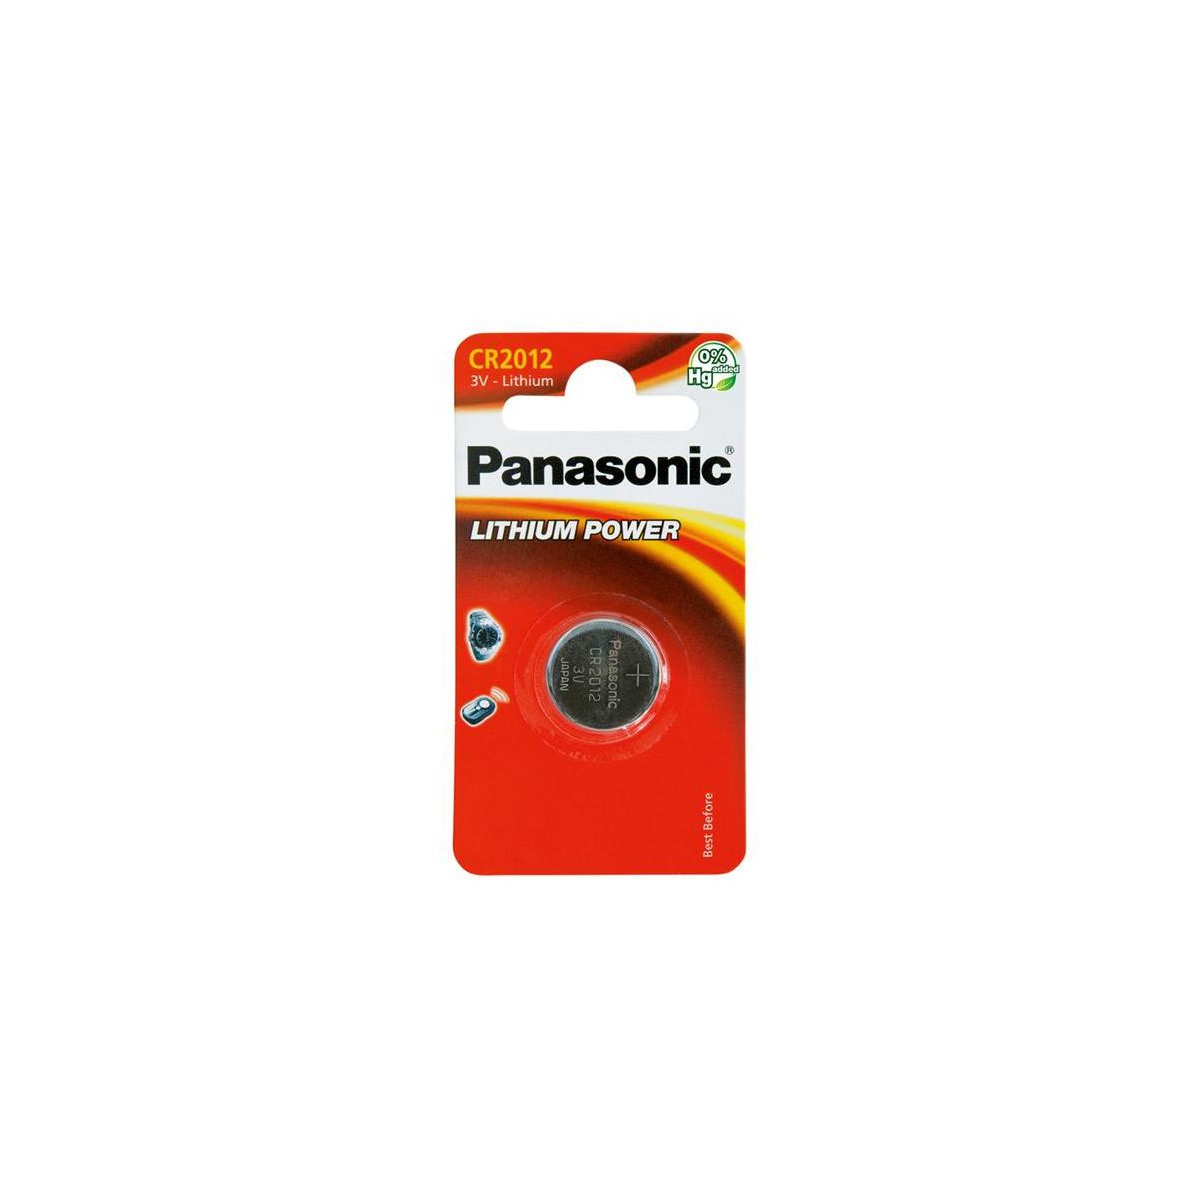 Baterie CR2012 PANASONIC lithiová 1ks / blistr